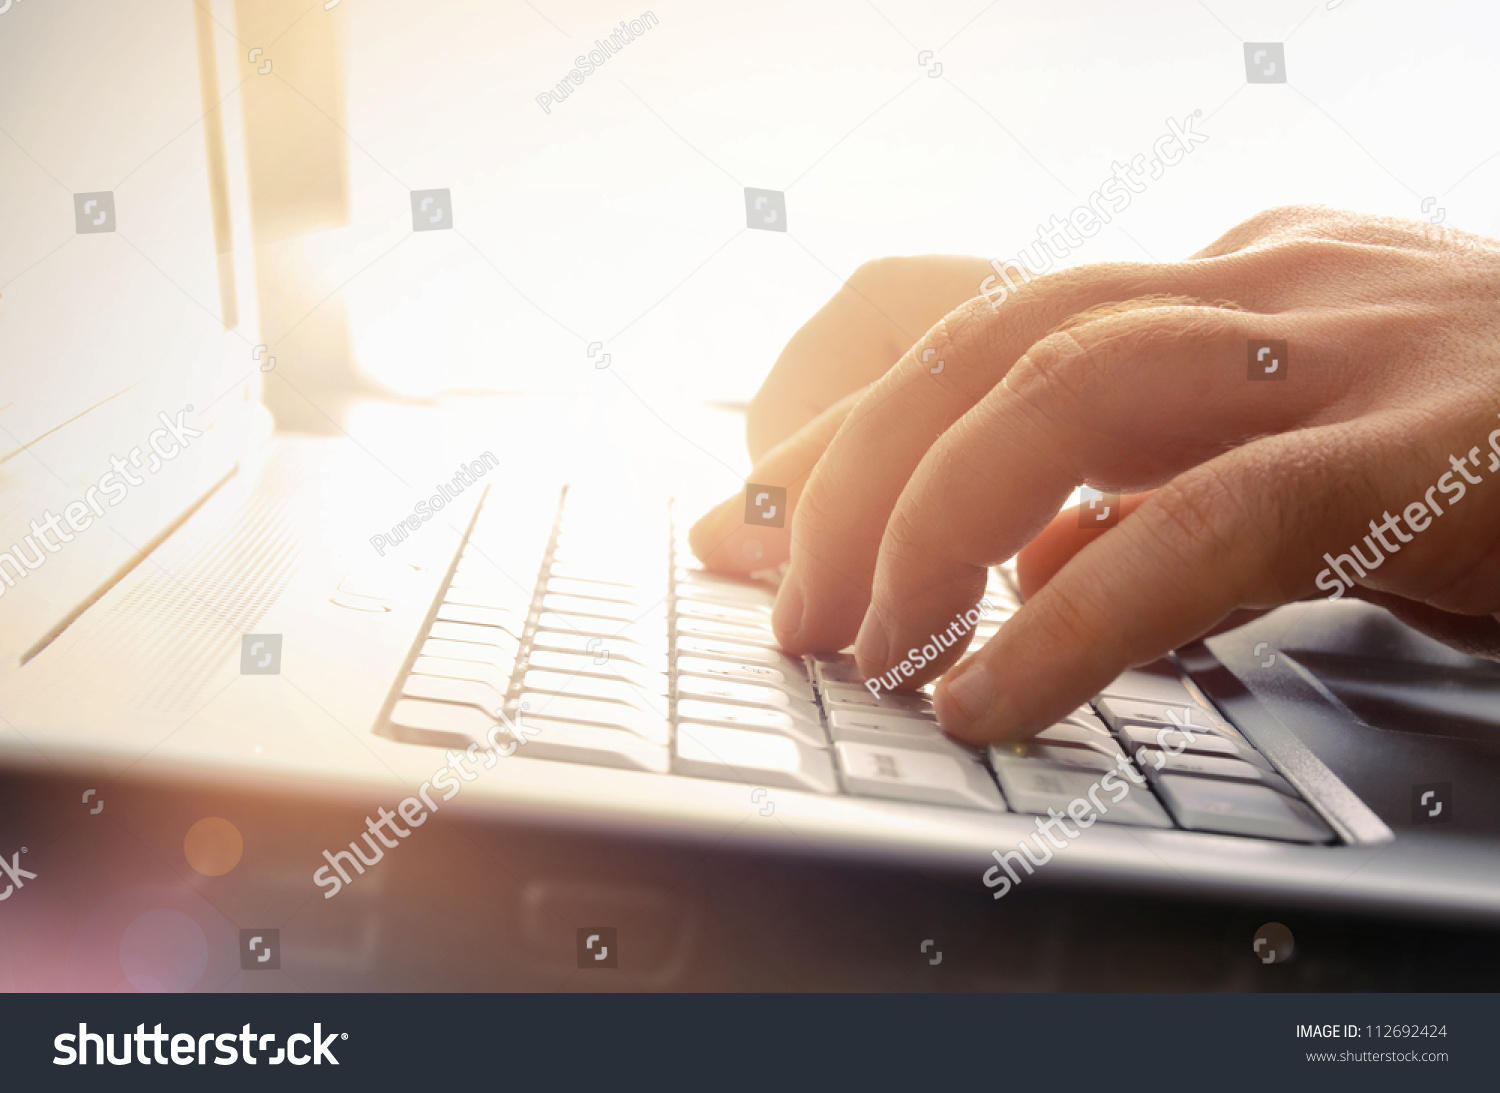 Man's hands typing on laptop keyboard #112692424